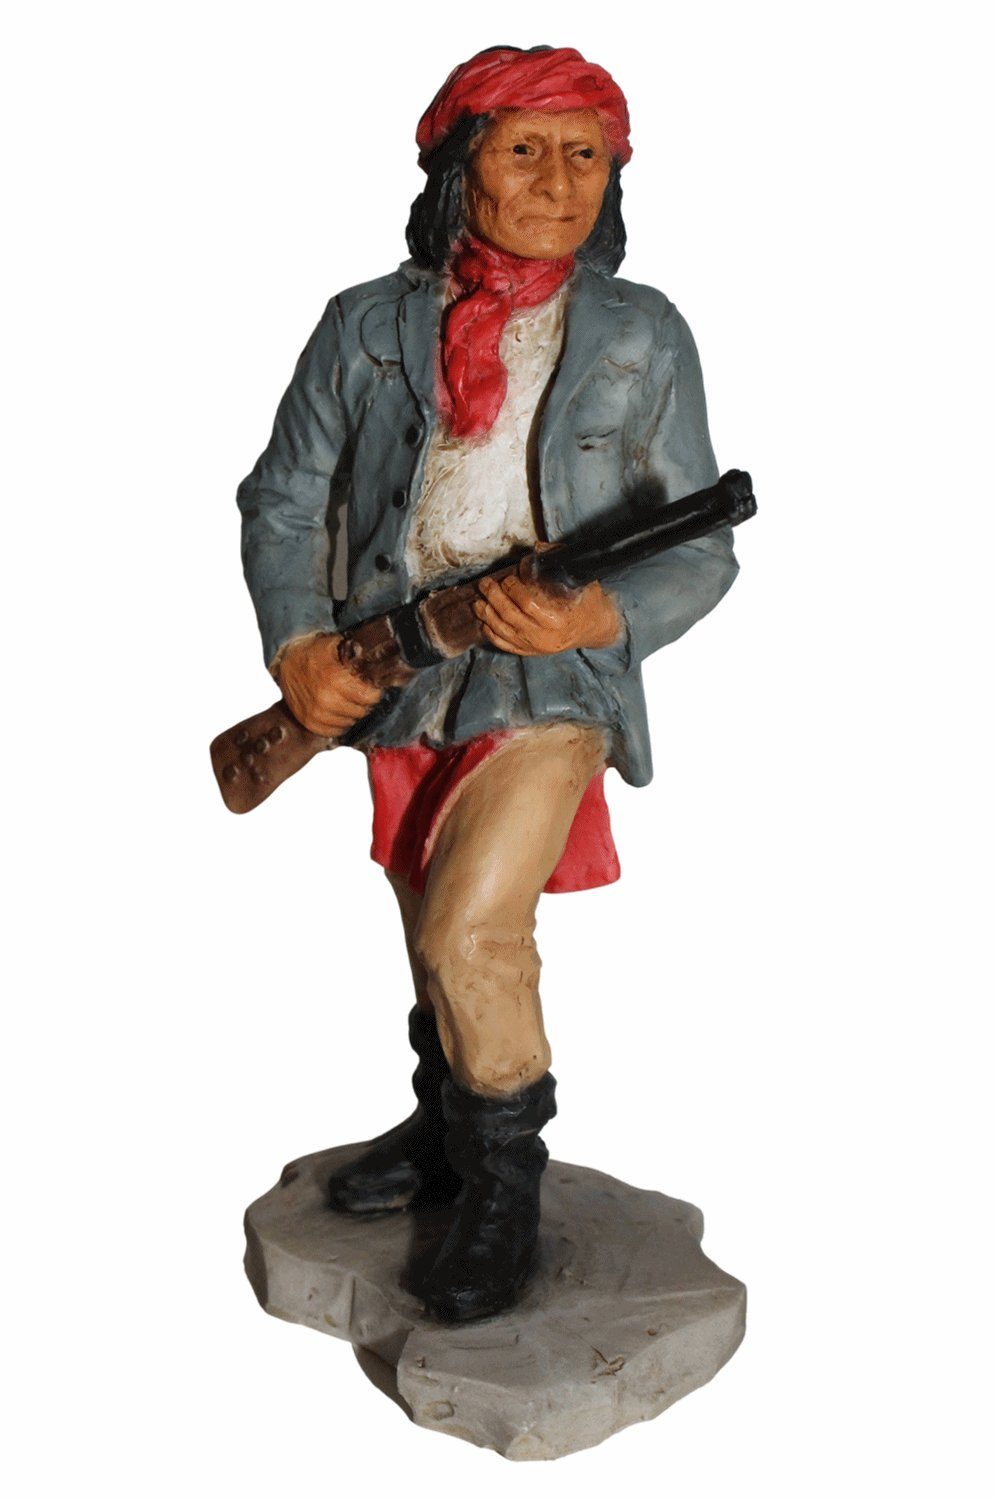 H Figur Castagna Geronimo Native Kriegshäuptling Deko cm Dekofigur American 15